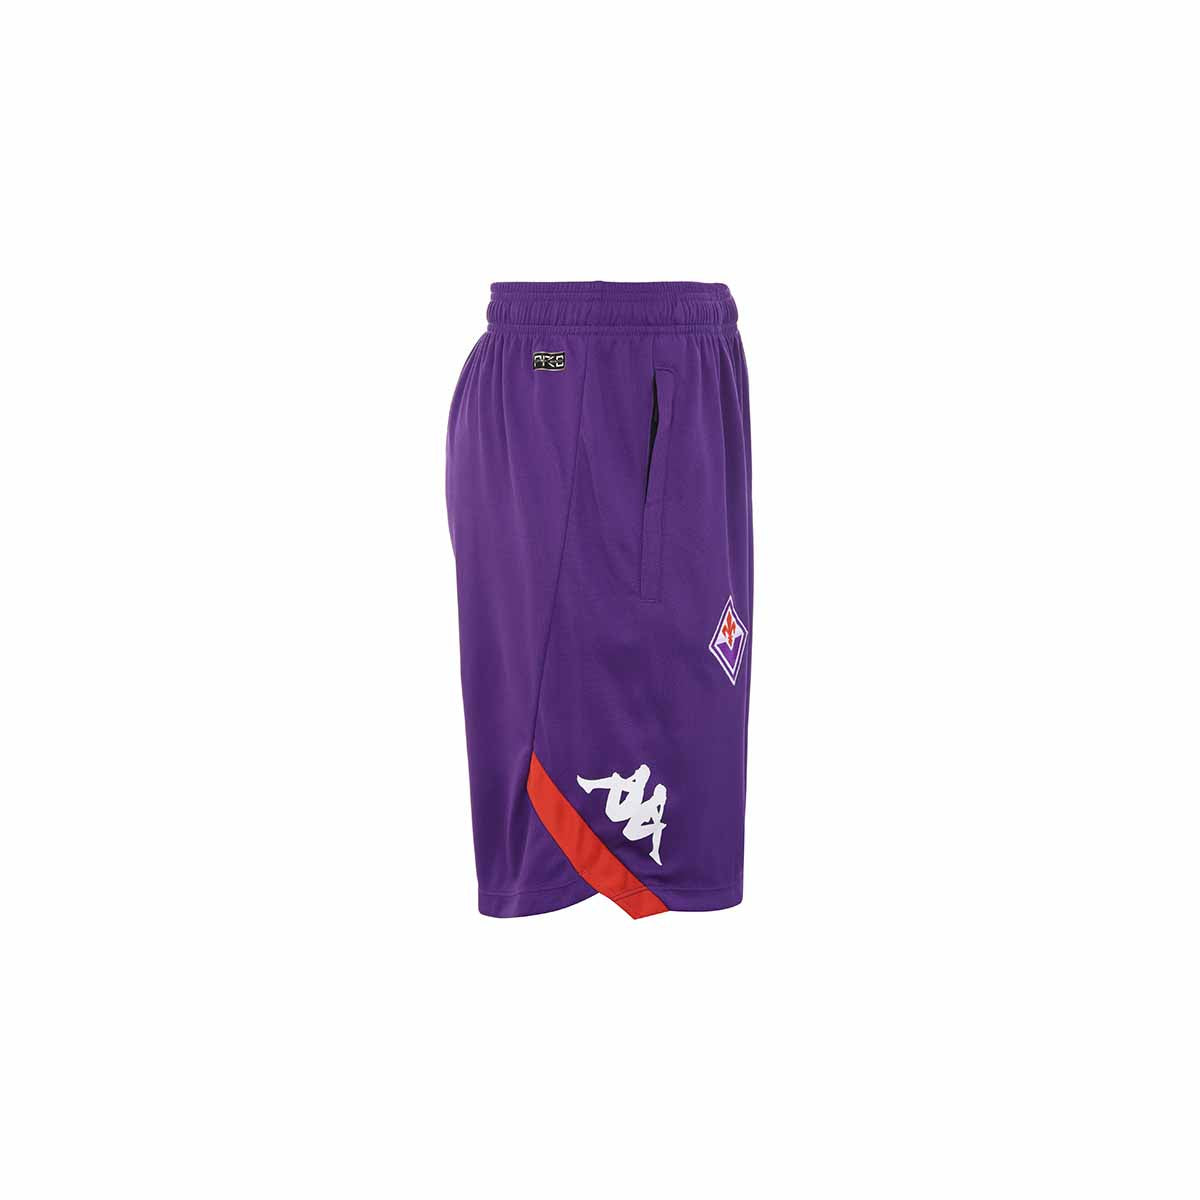 Fiorentina 22/23 Ahorazip Pro 6 Short Purple Hombre